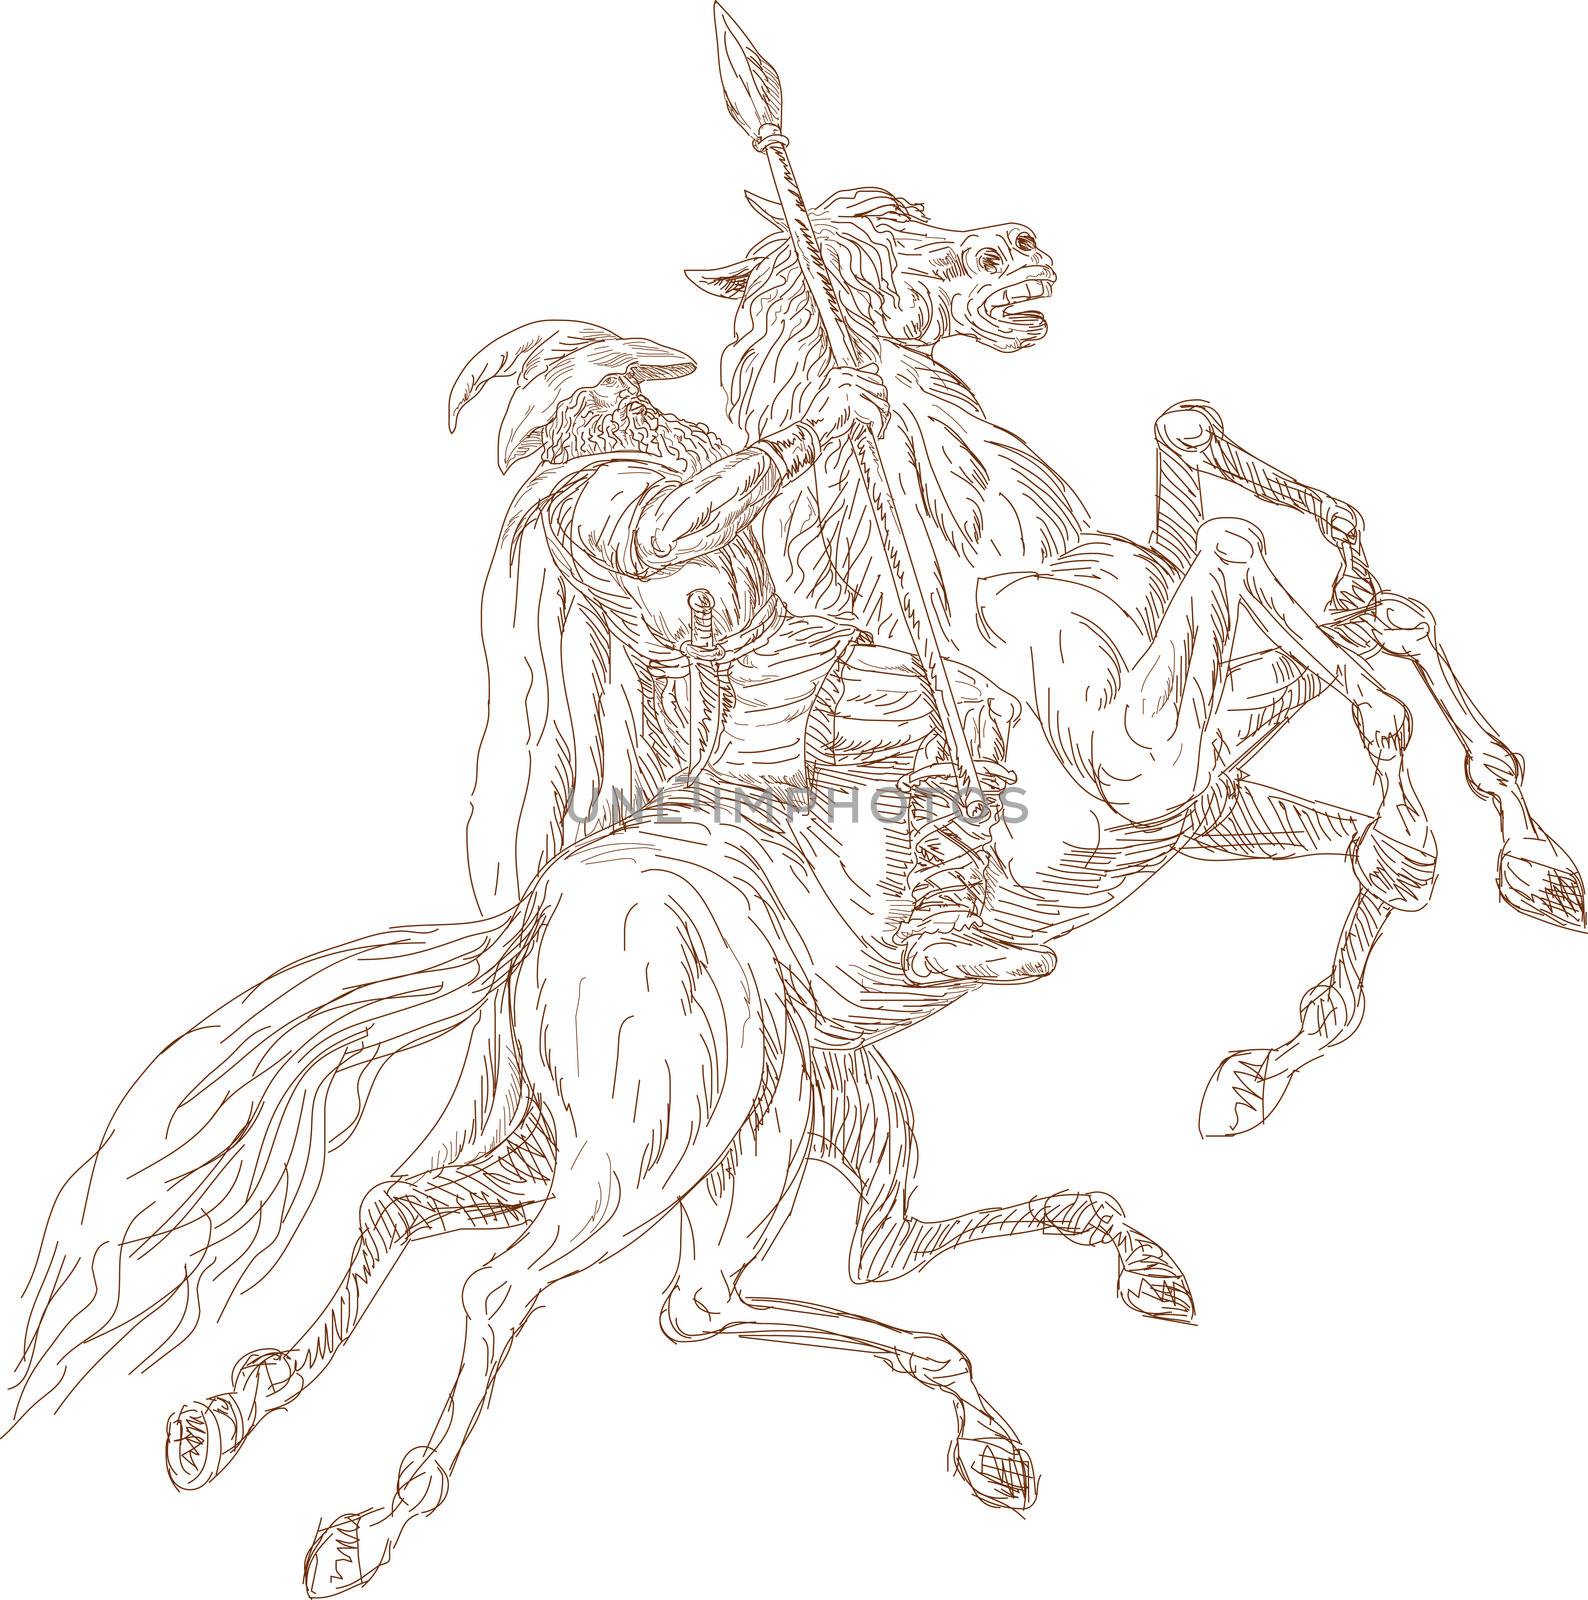 Norse God Odin riding eight-legged horse by patrimonio